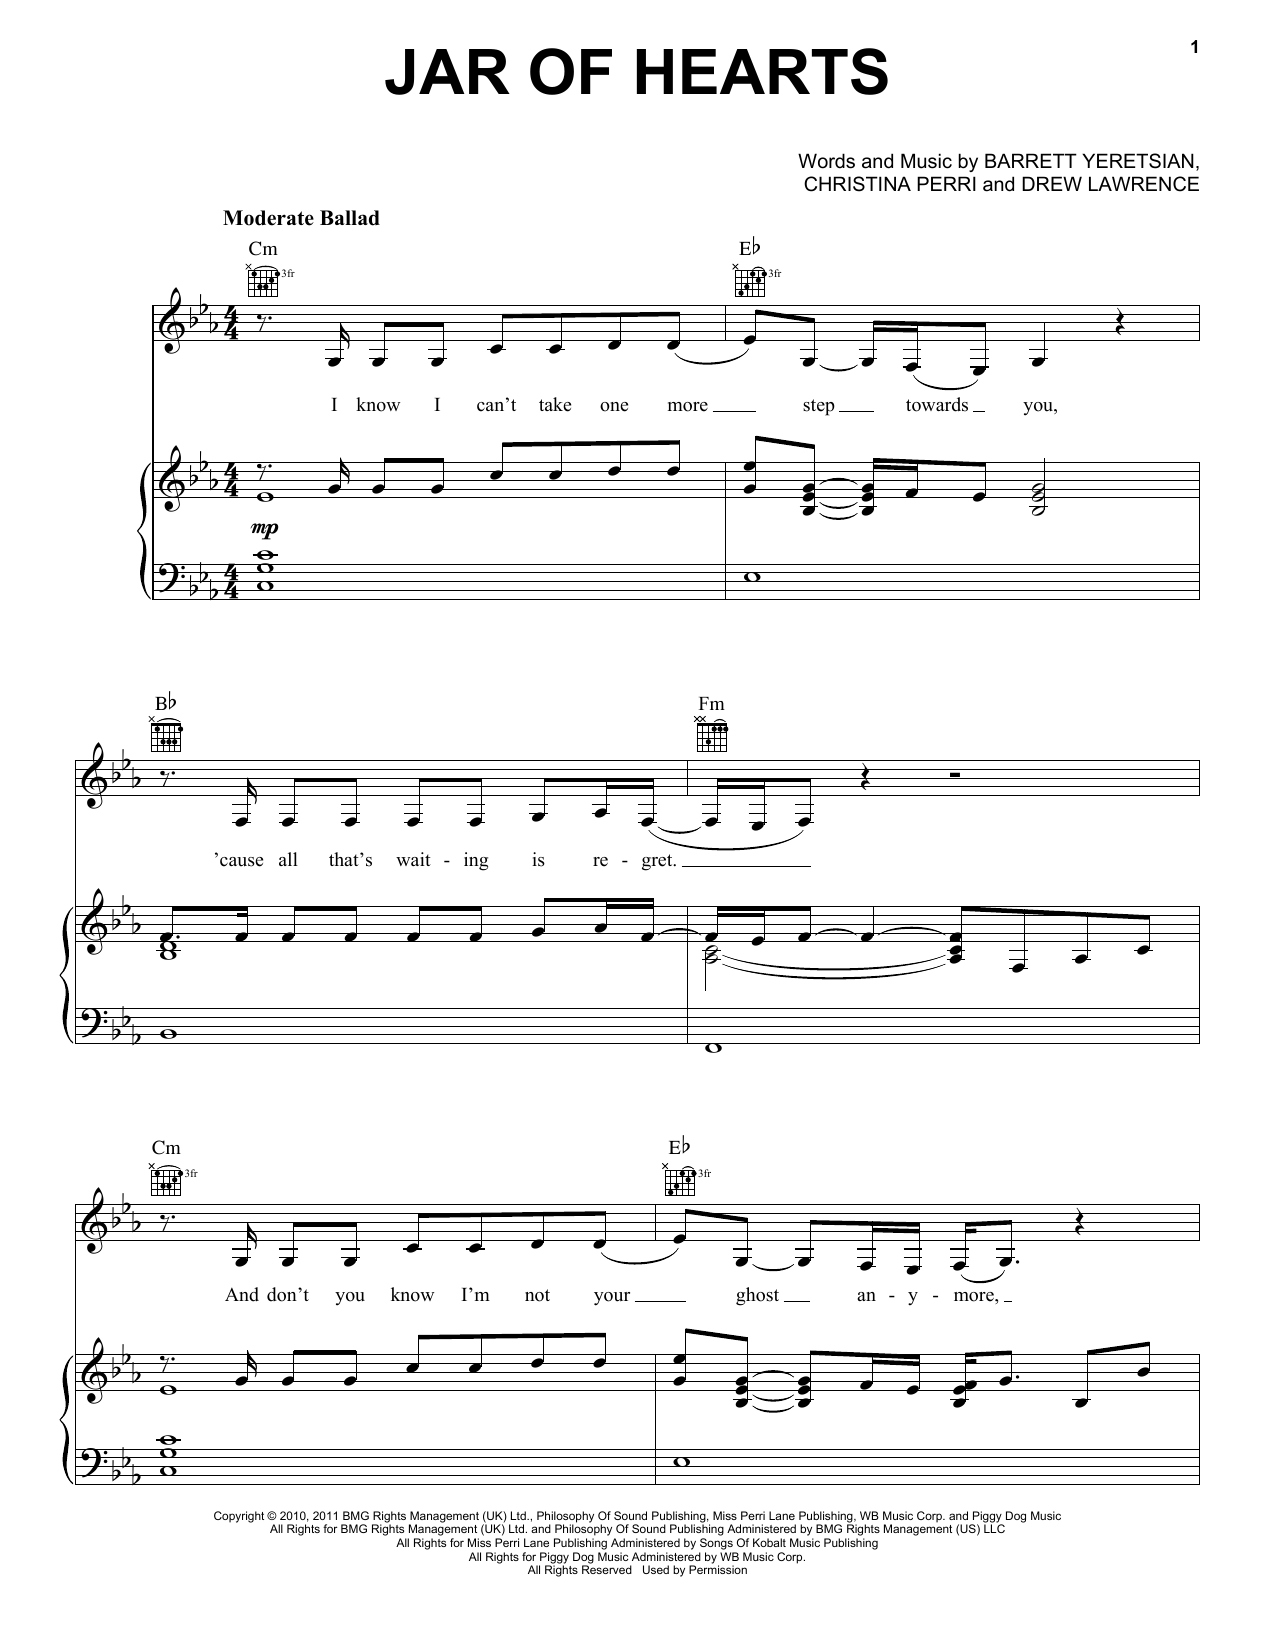 Christina Perri Jar Of Hearts sheet music notes and chords. Download Printable PDF.